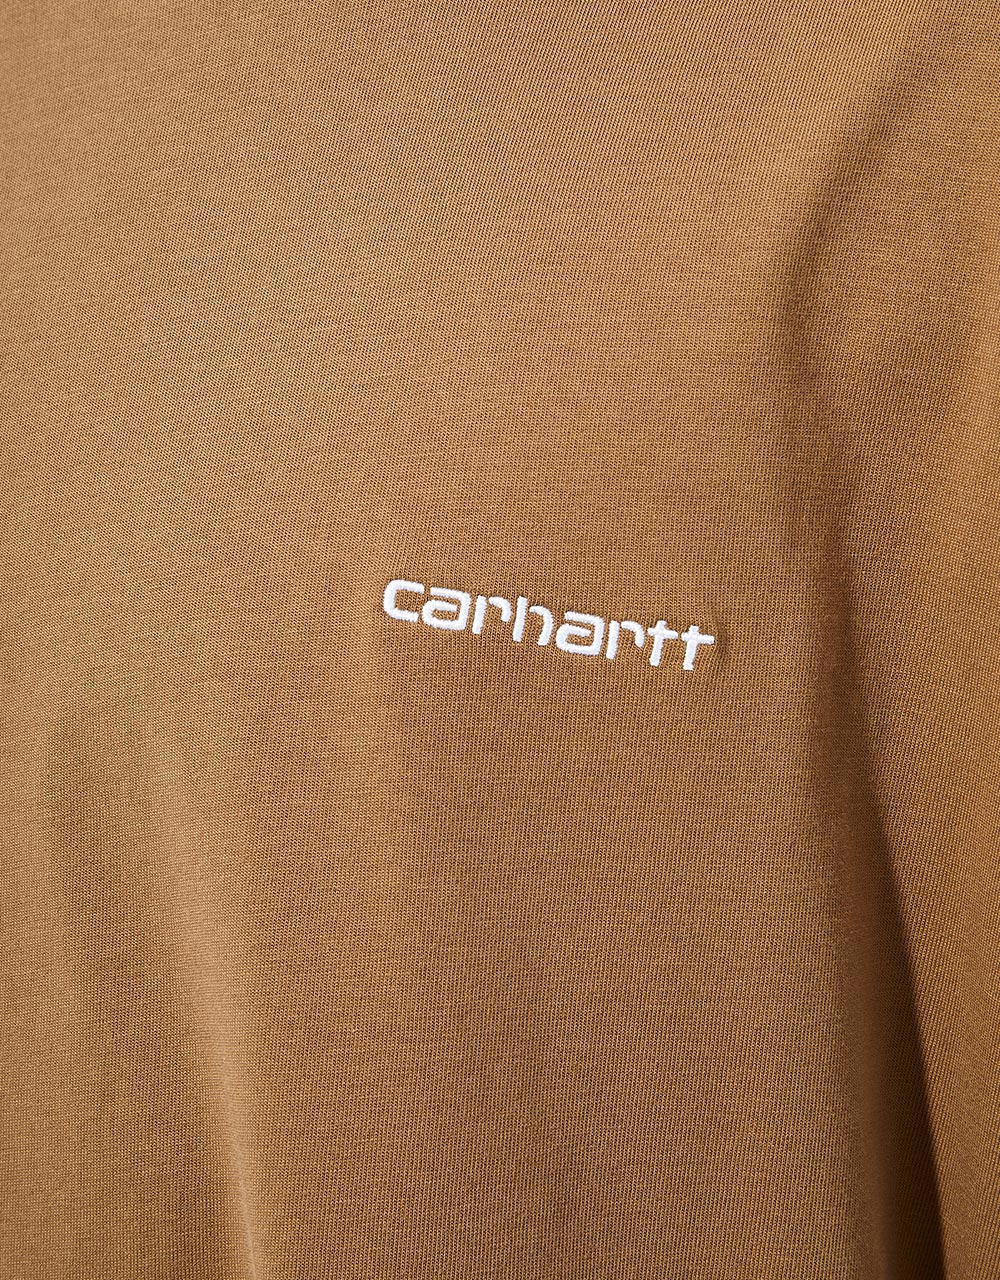 Carhartt WIP S/S Script Embroidery T-Shirt - Buffalo/White